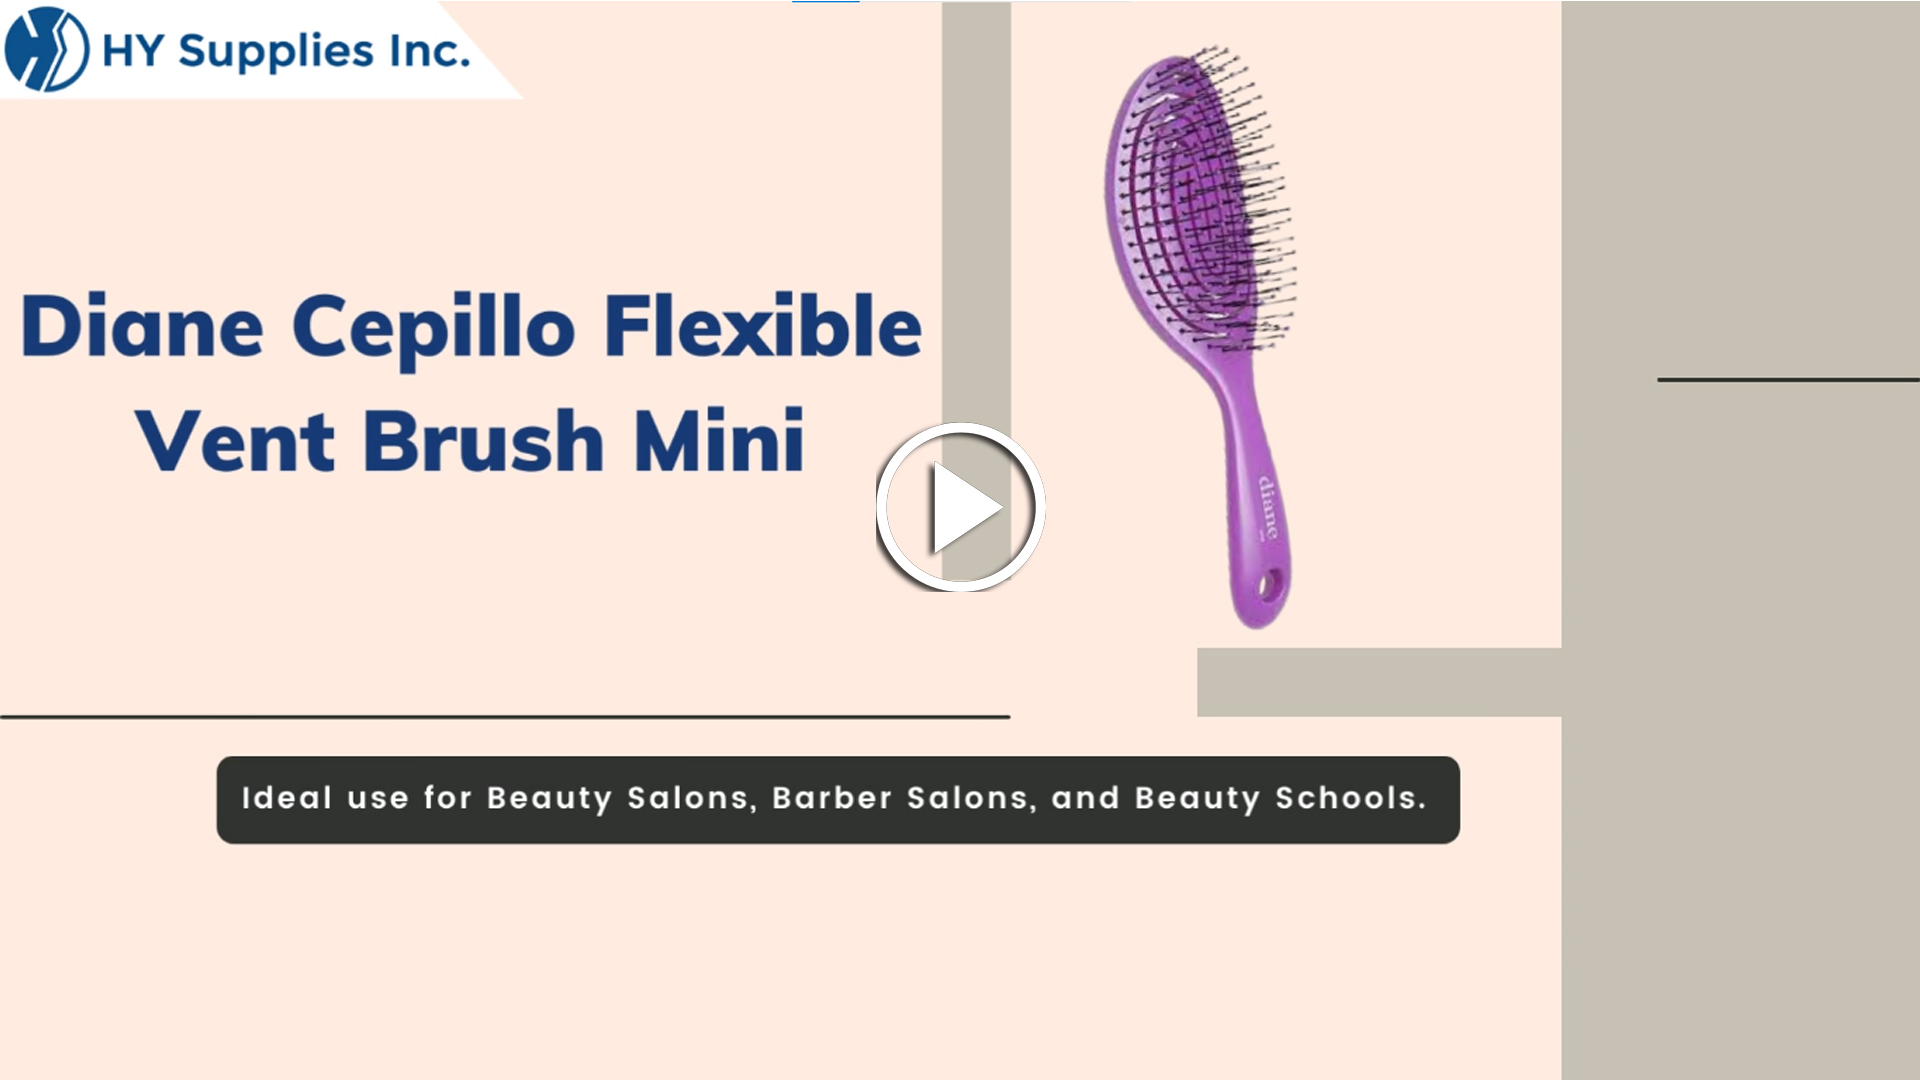 Diane Cepillo Flexible Vent Brush Mini